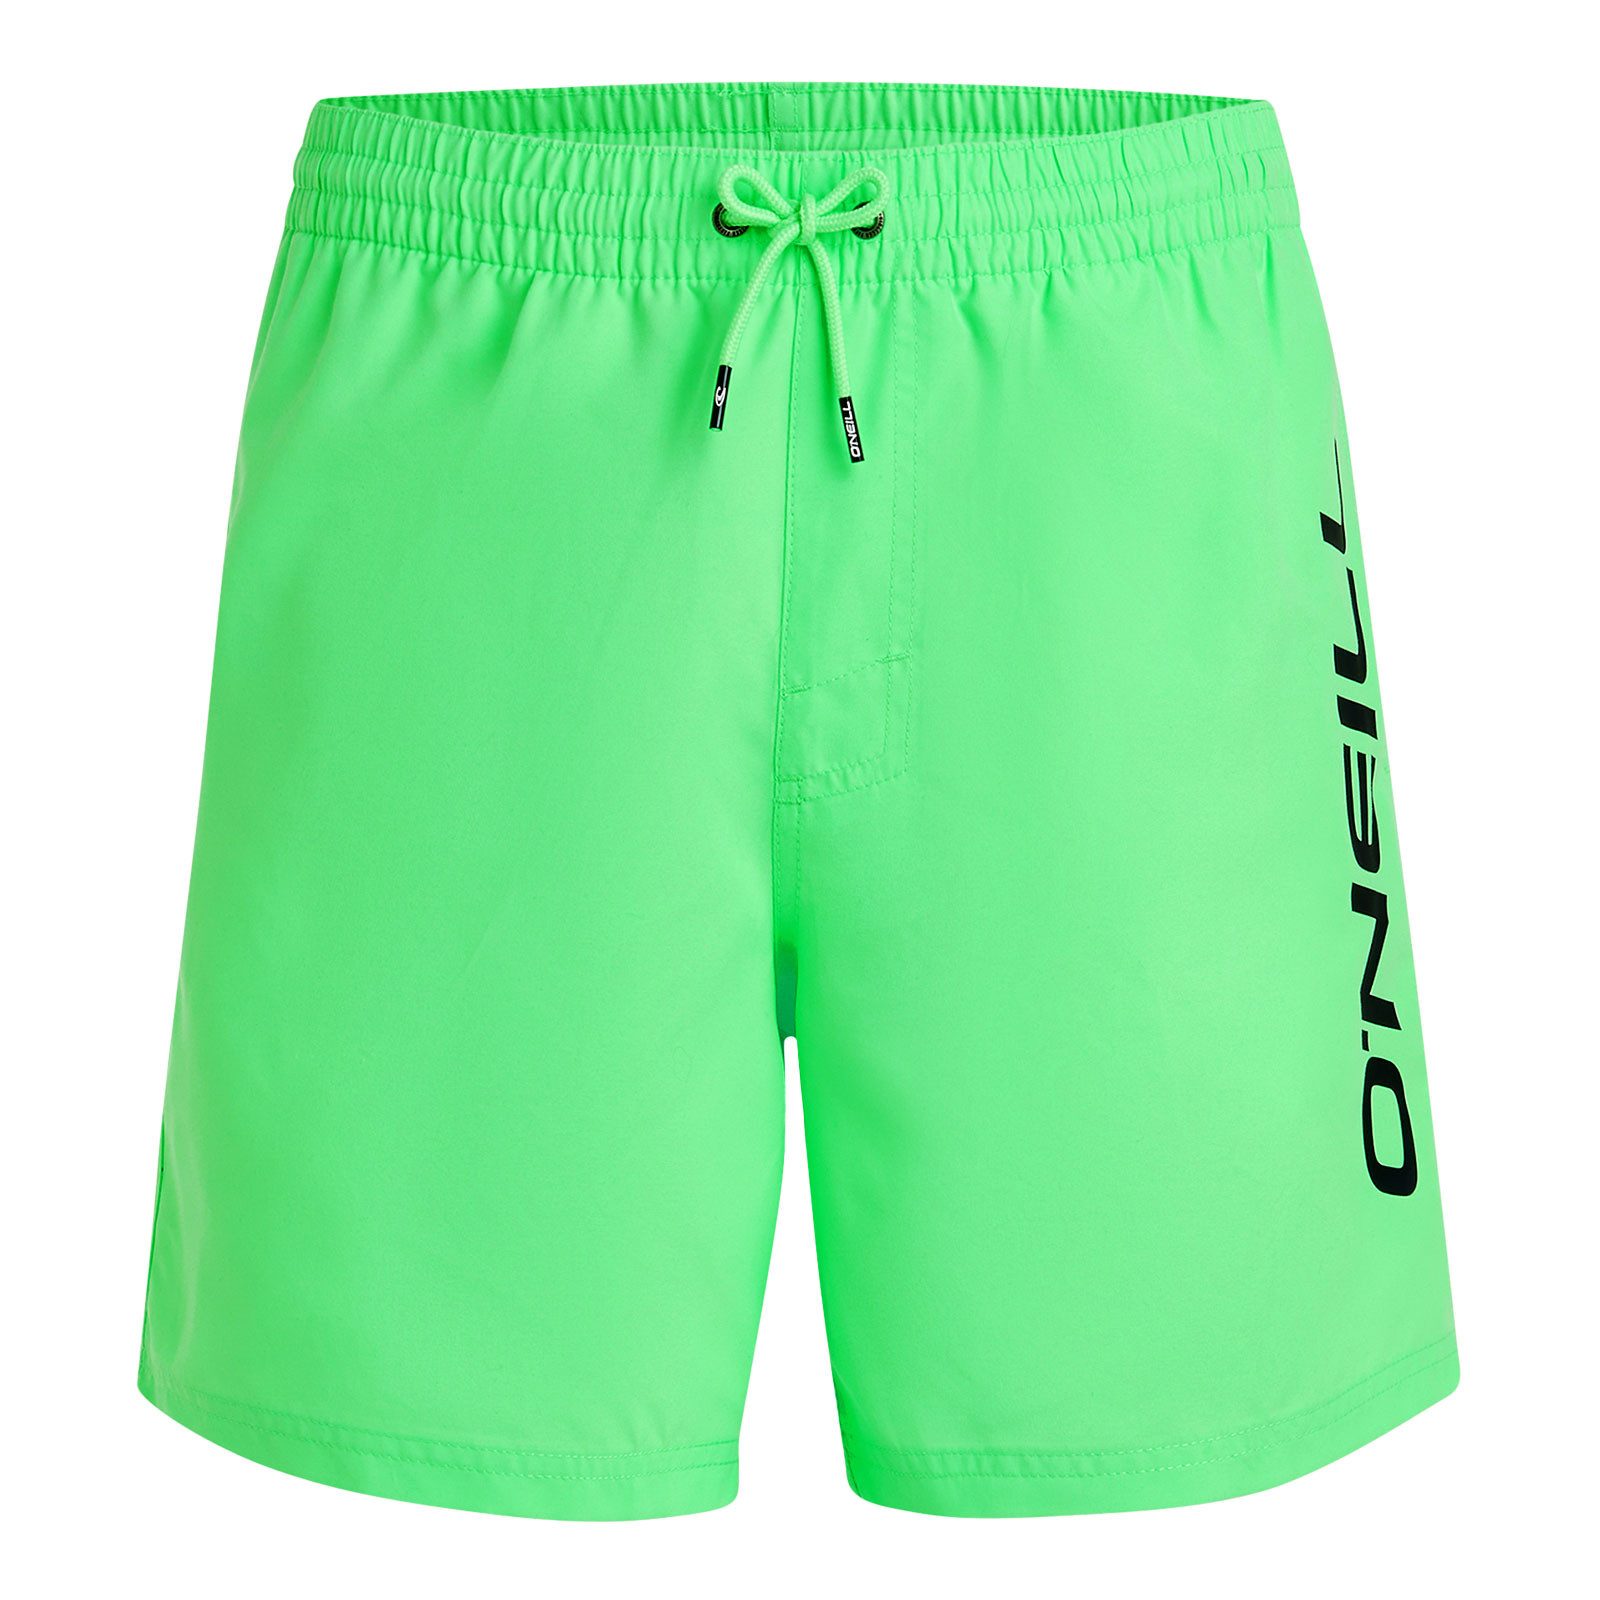 O'Neill Badeshorts Cali 16 Swim Shorts mit großem Markenschriftzug